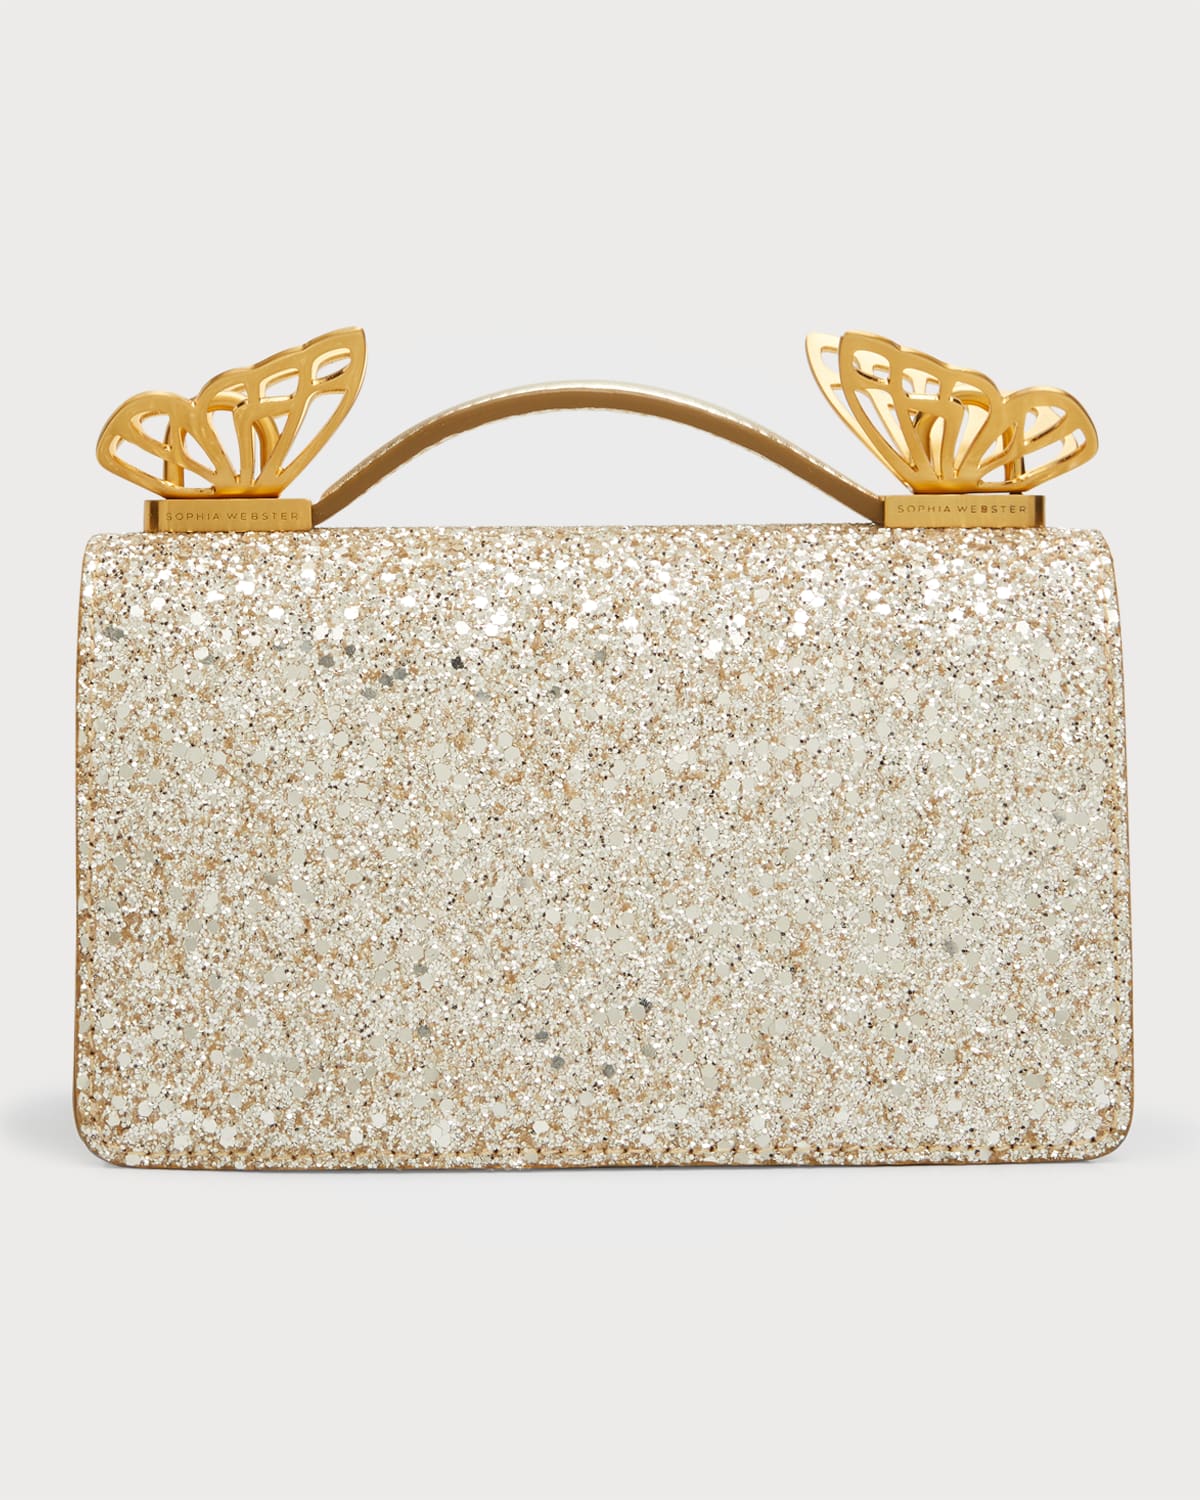 Sophia Webster Mariposa Mini Glitter Top-handle Bag In Champagne Glitter